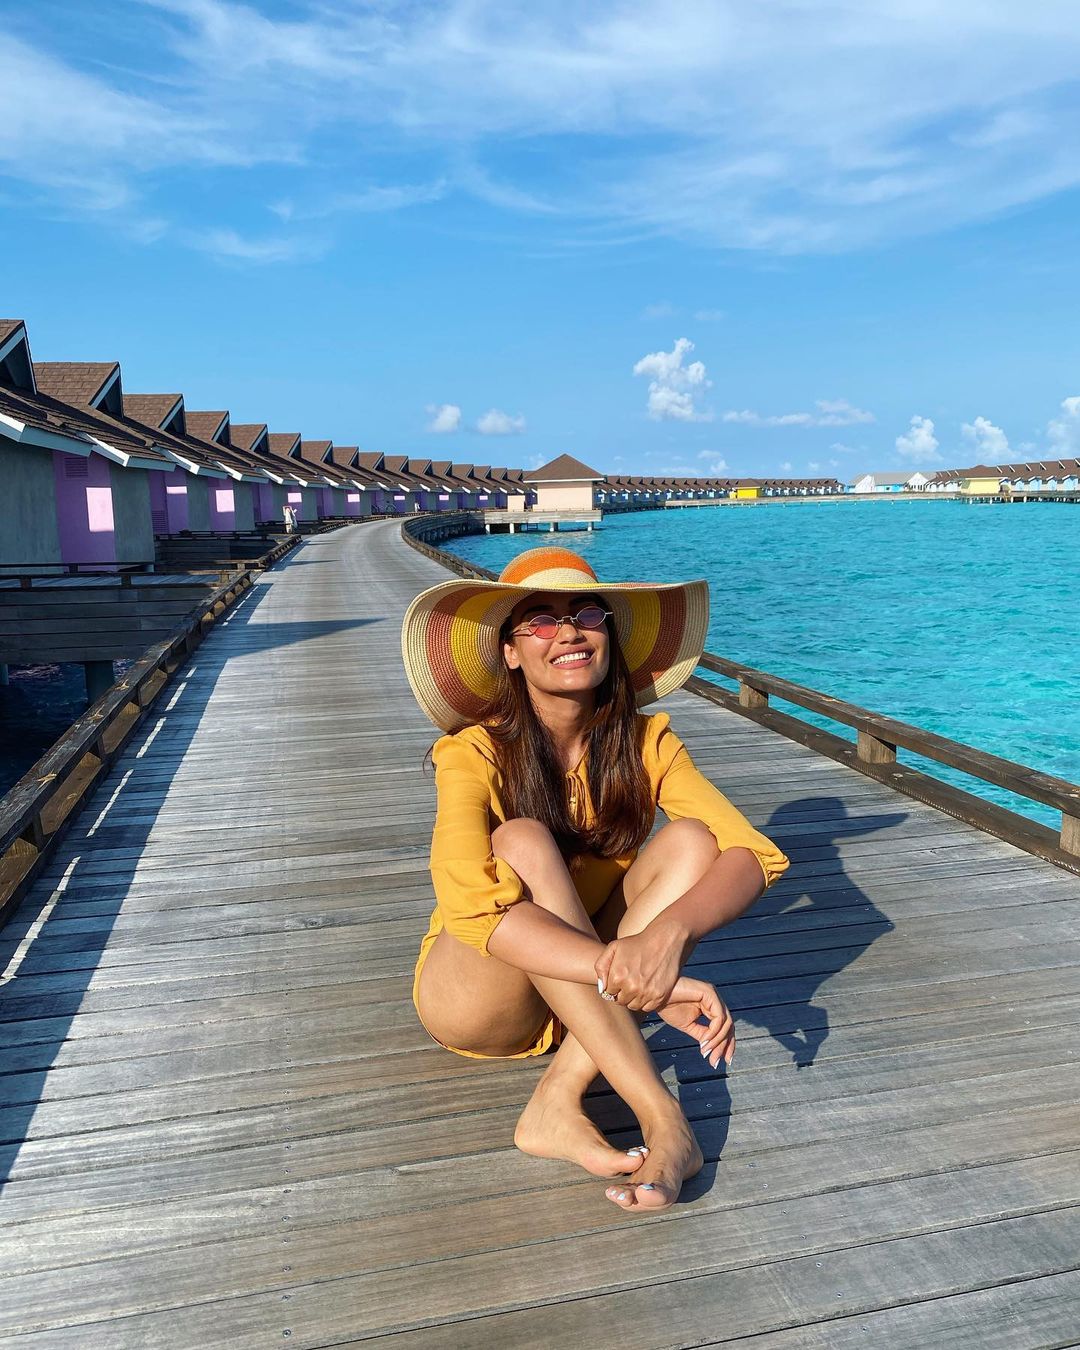  Actress Surbhi Jyoti is enjoying a peaceful break by the beaches of Maldives.